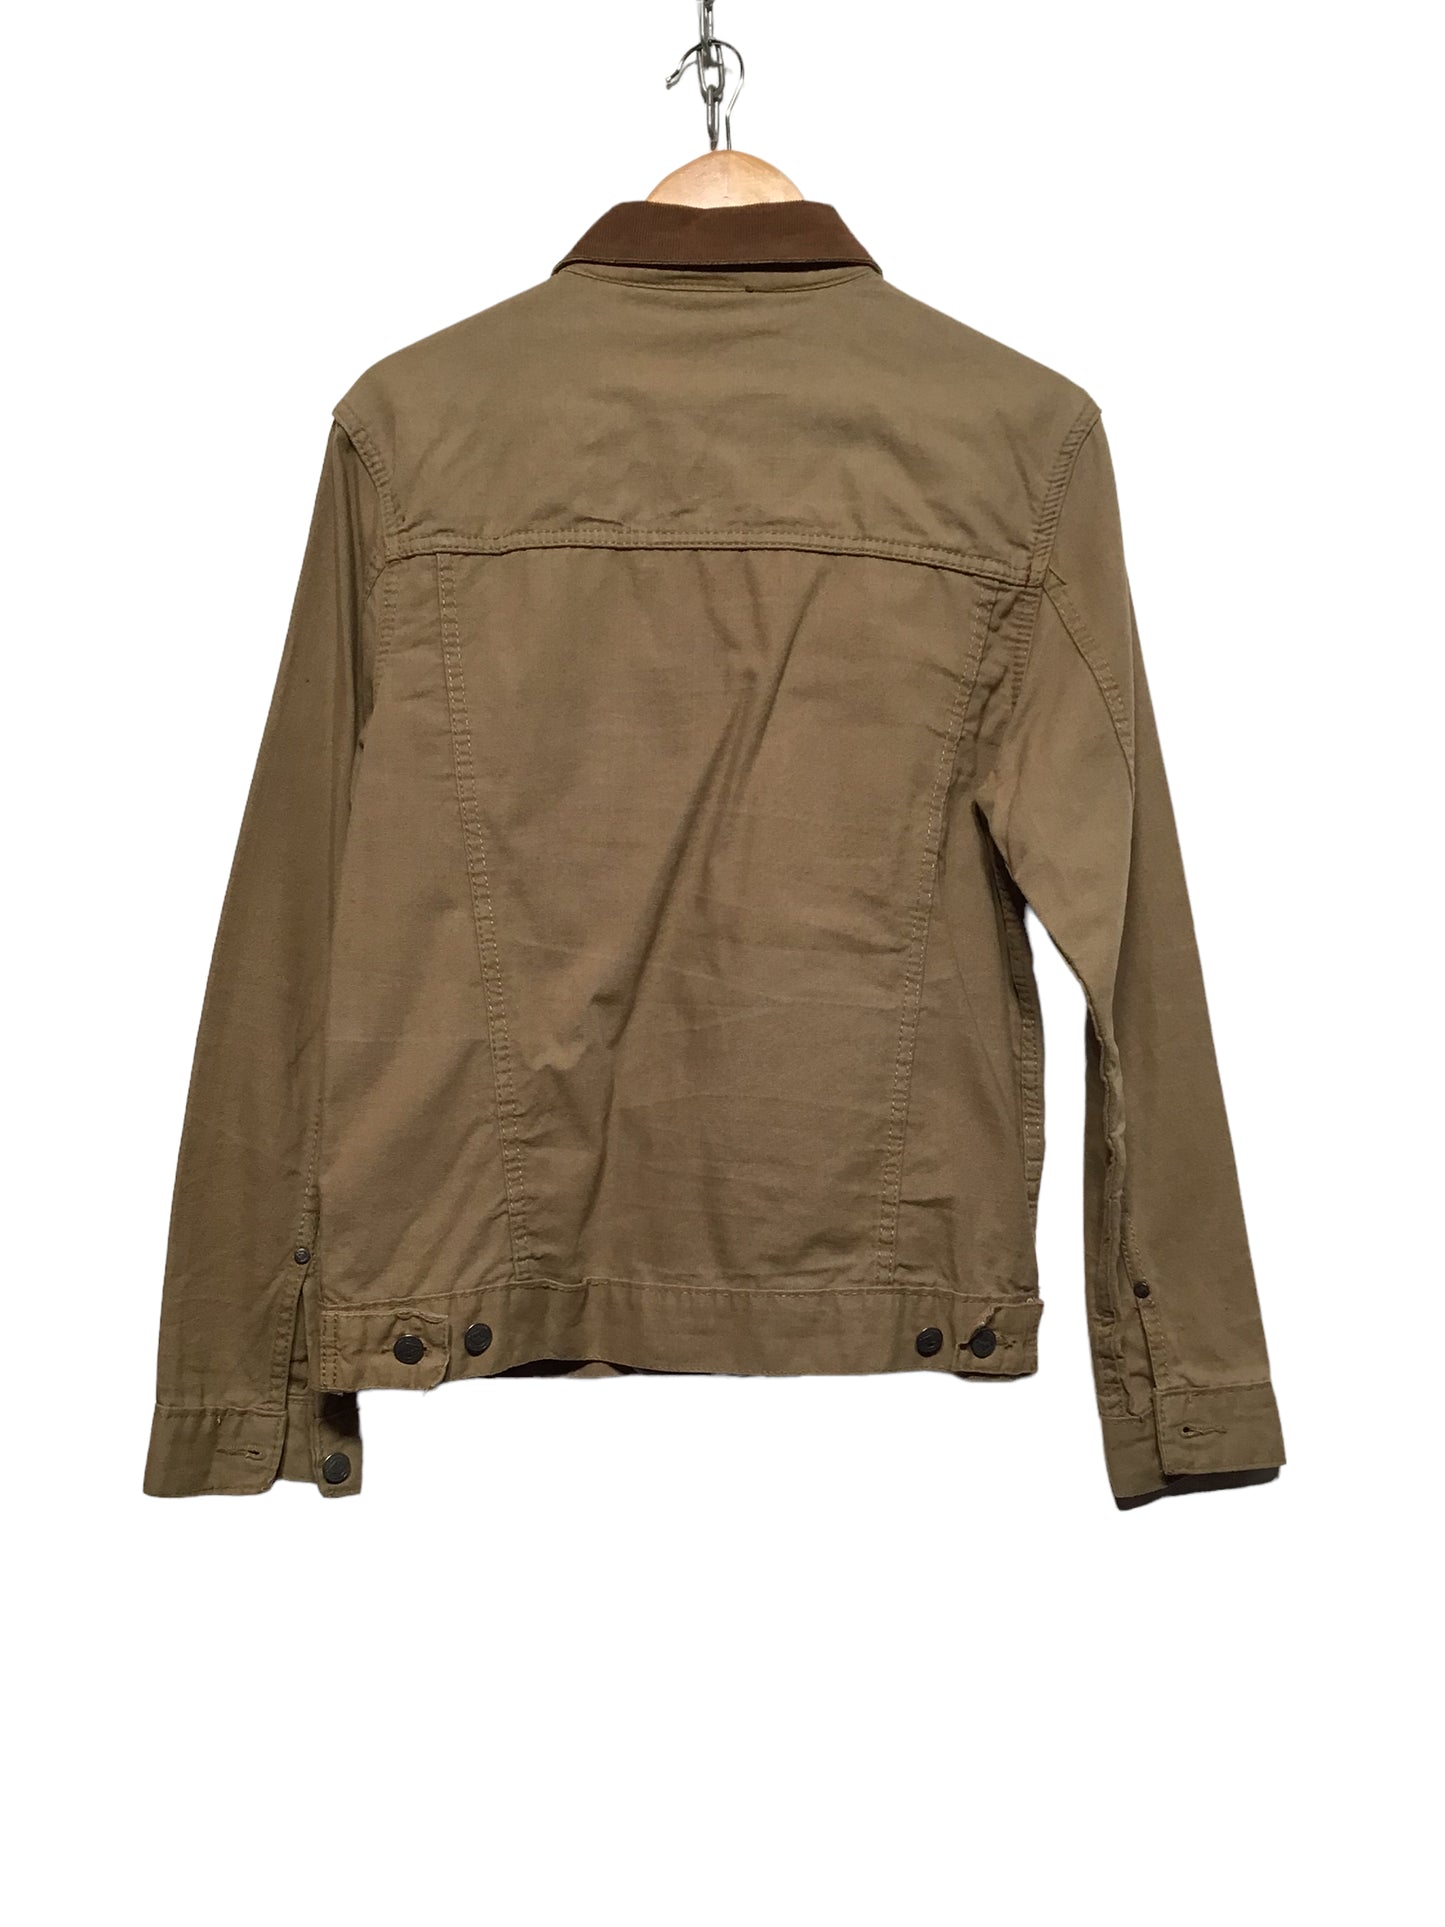 Lee Cooper Cotton Jacket (Size S)